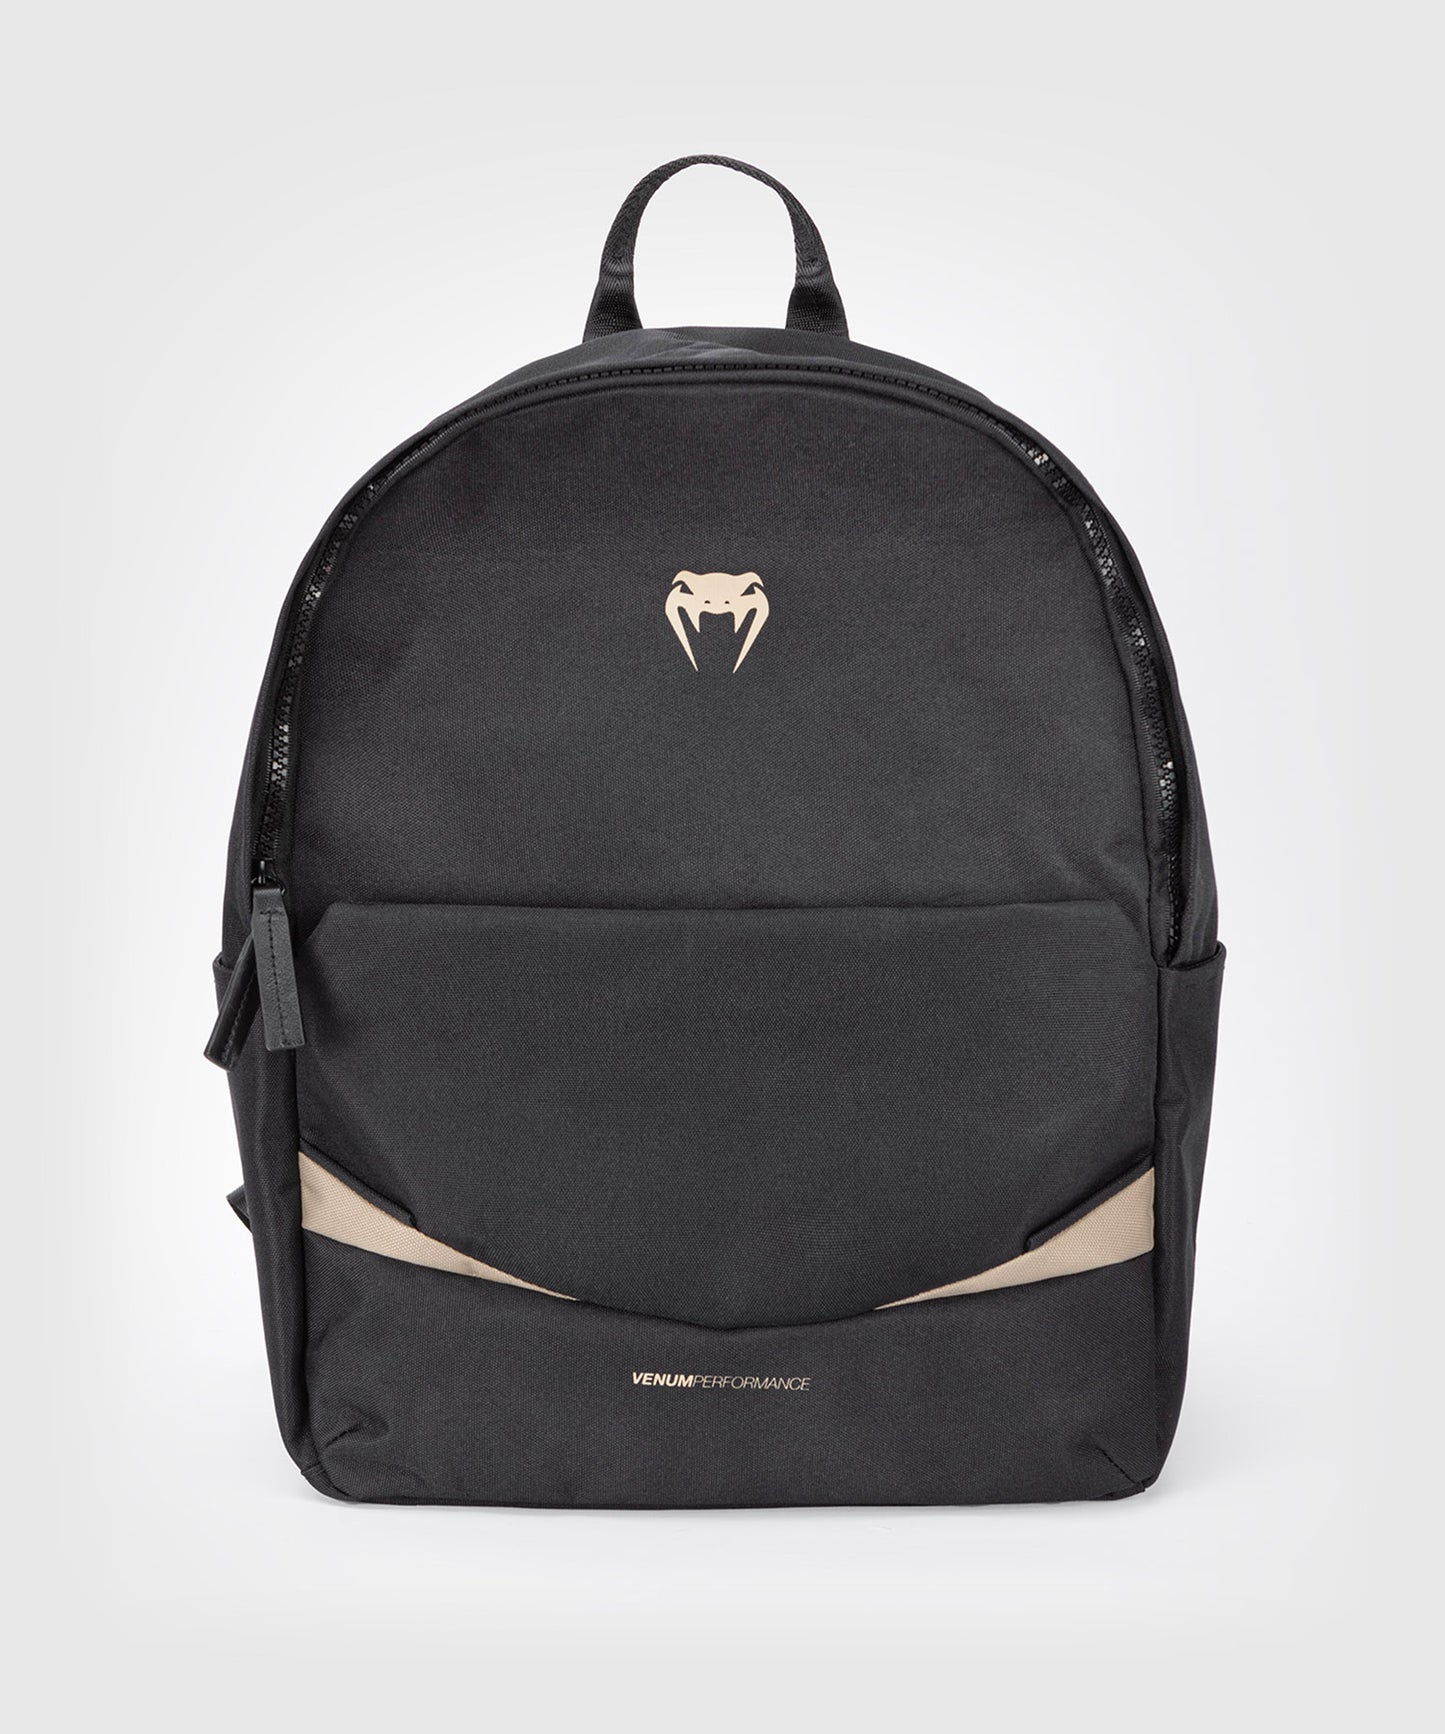 Venum Evo 2 Light Backpack - Black/Sand